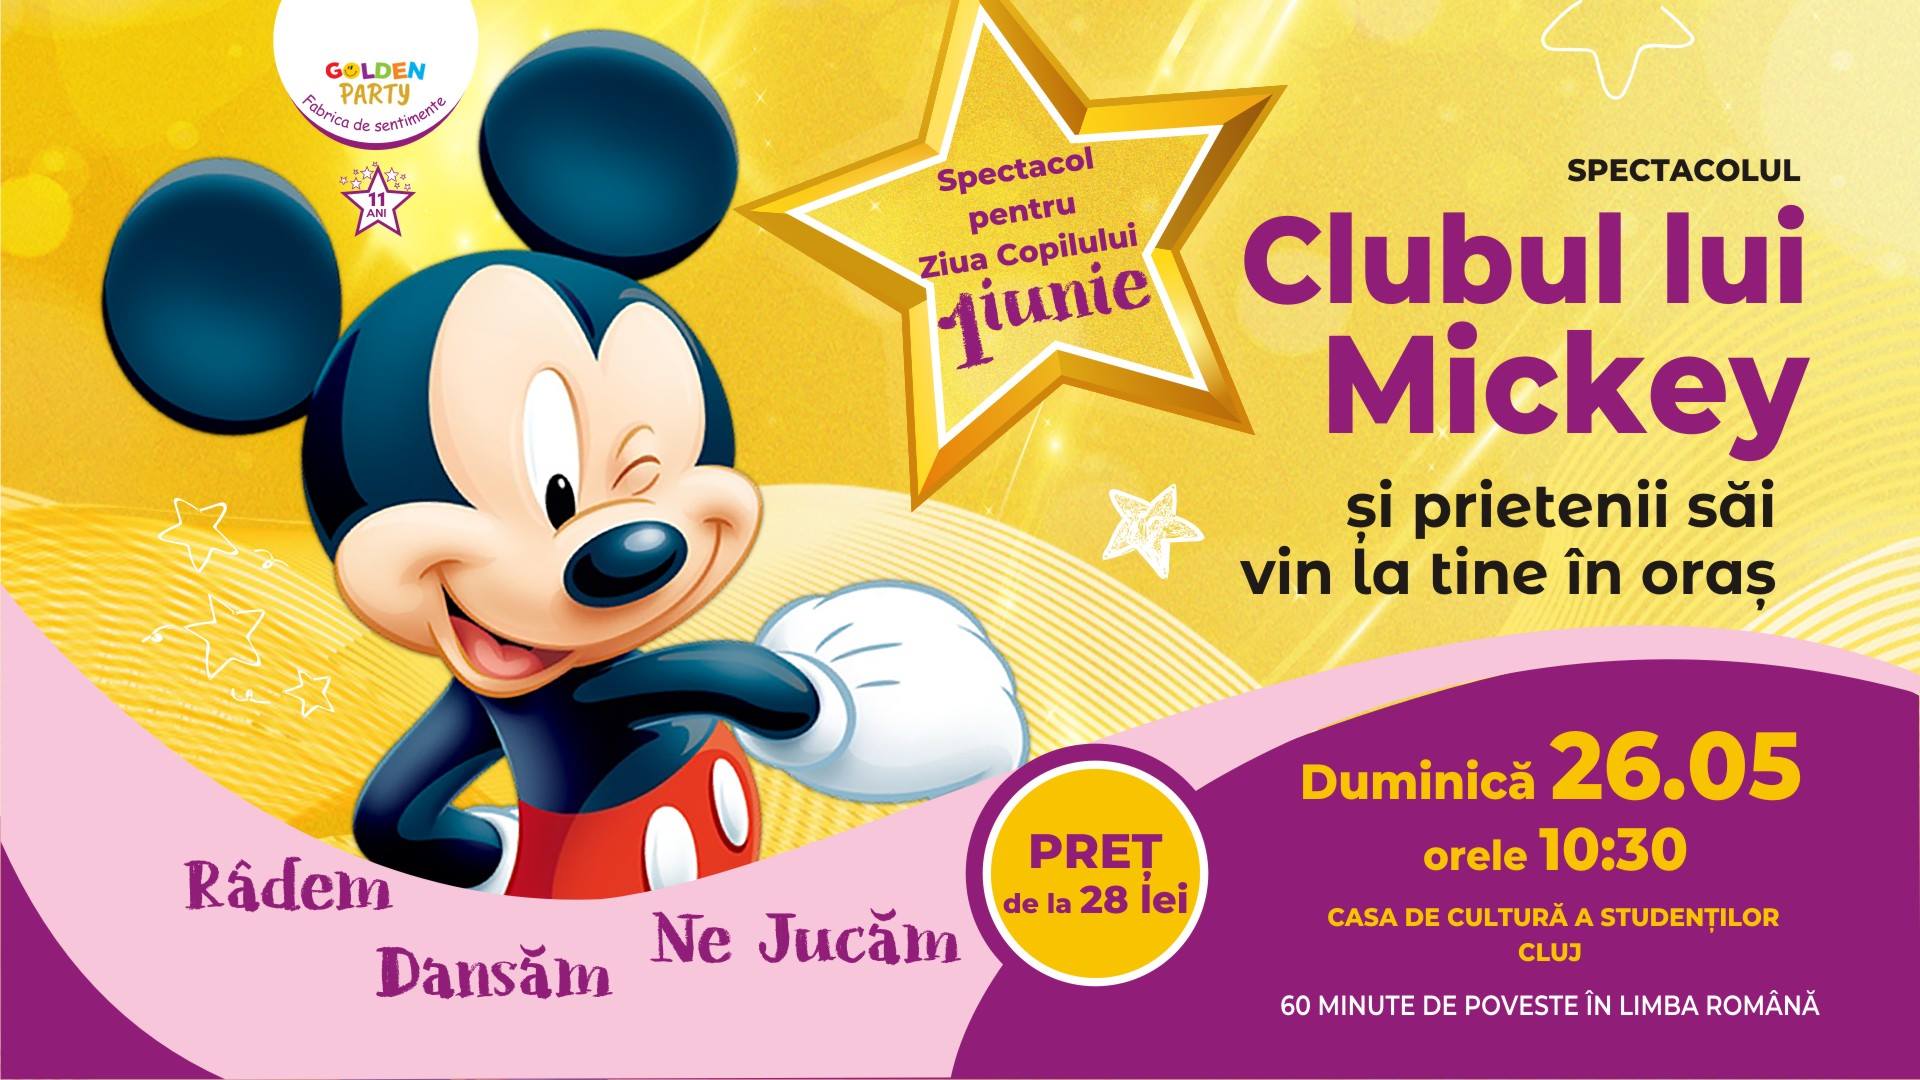 Clubul lui Mickey